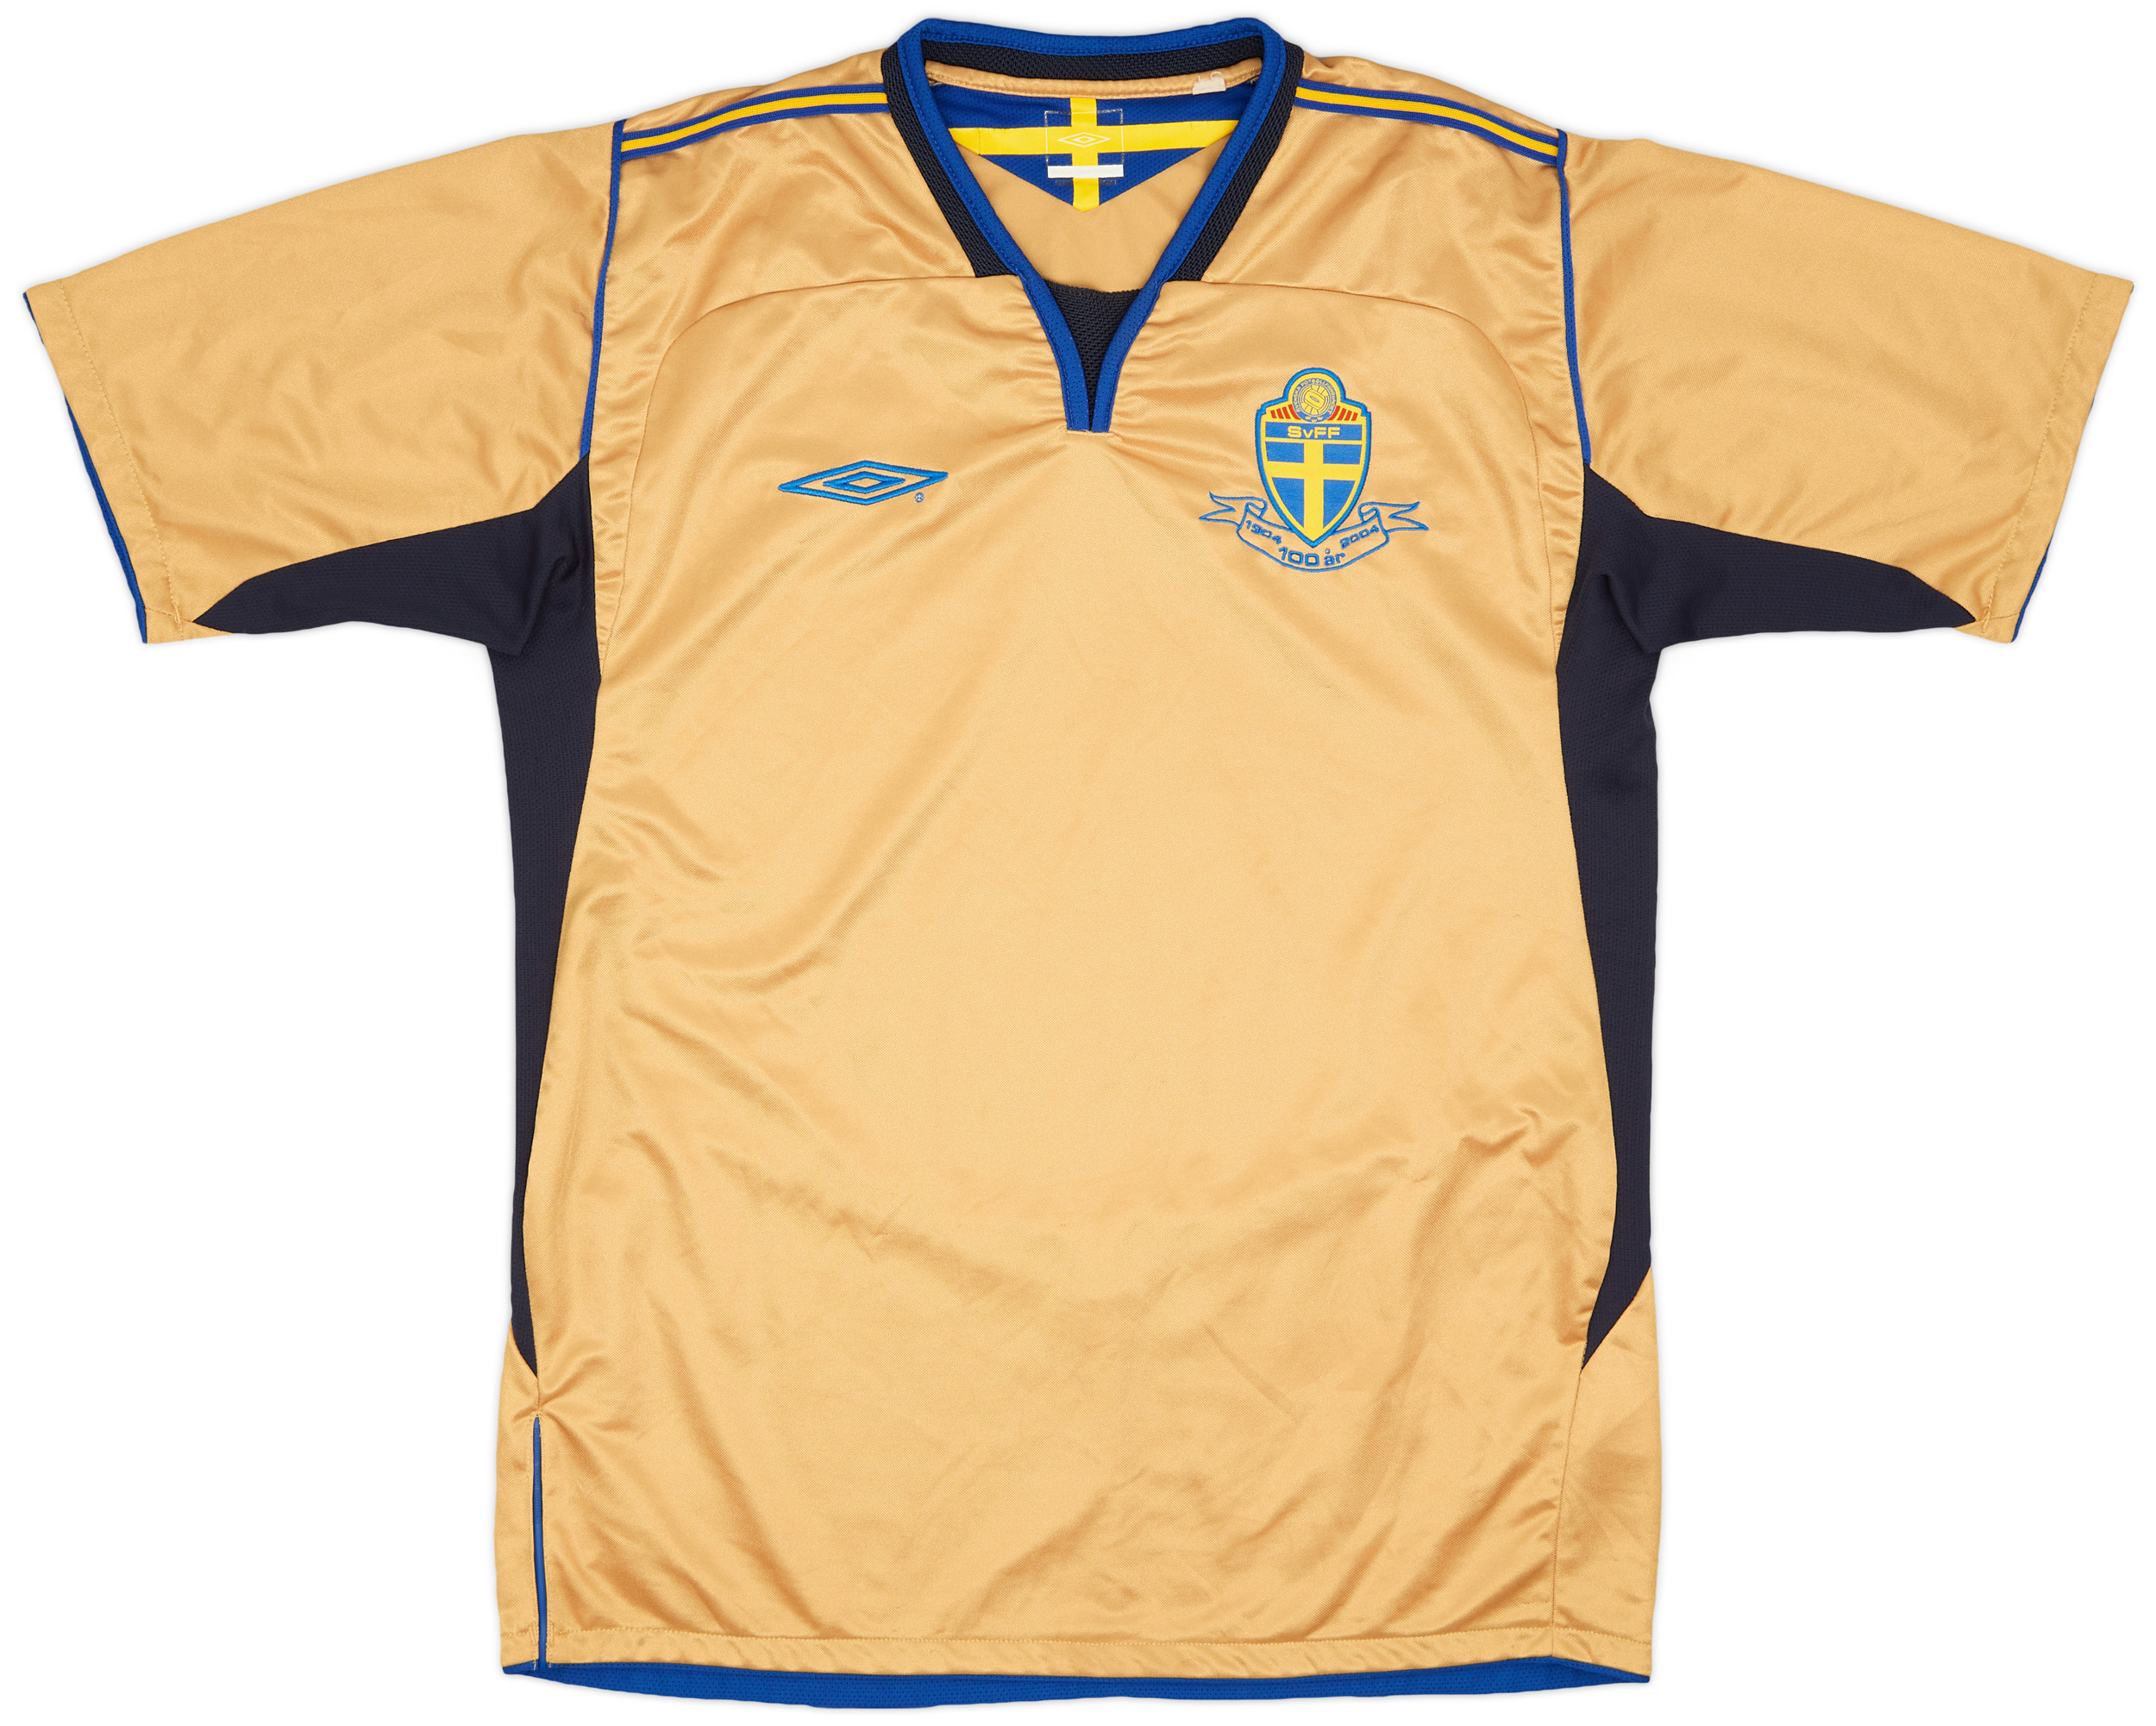 2004-05 Sweden Anniversary Third Shirt - 8/10 - ()